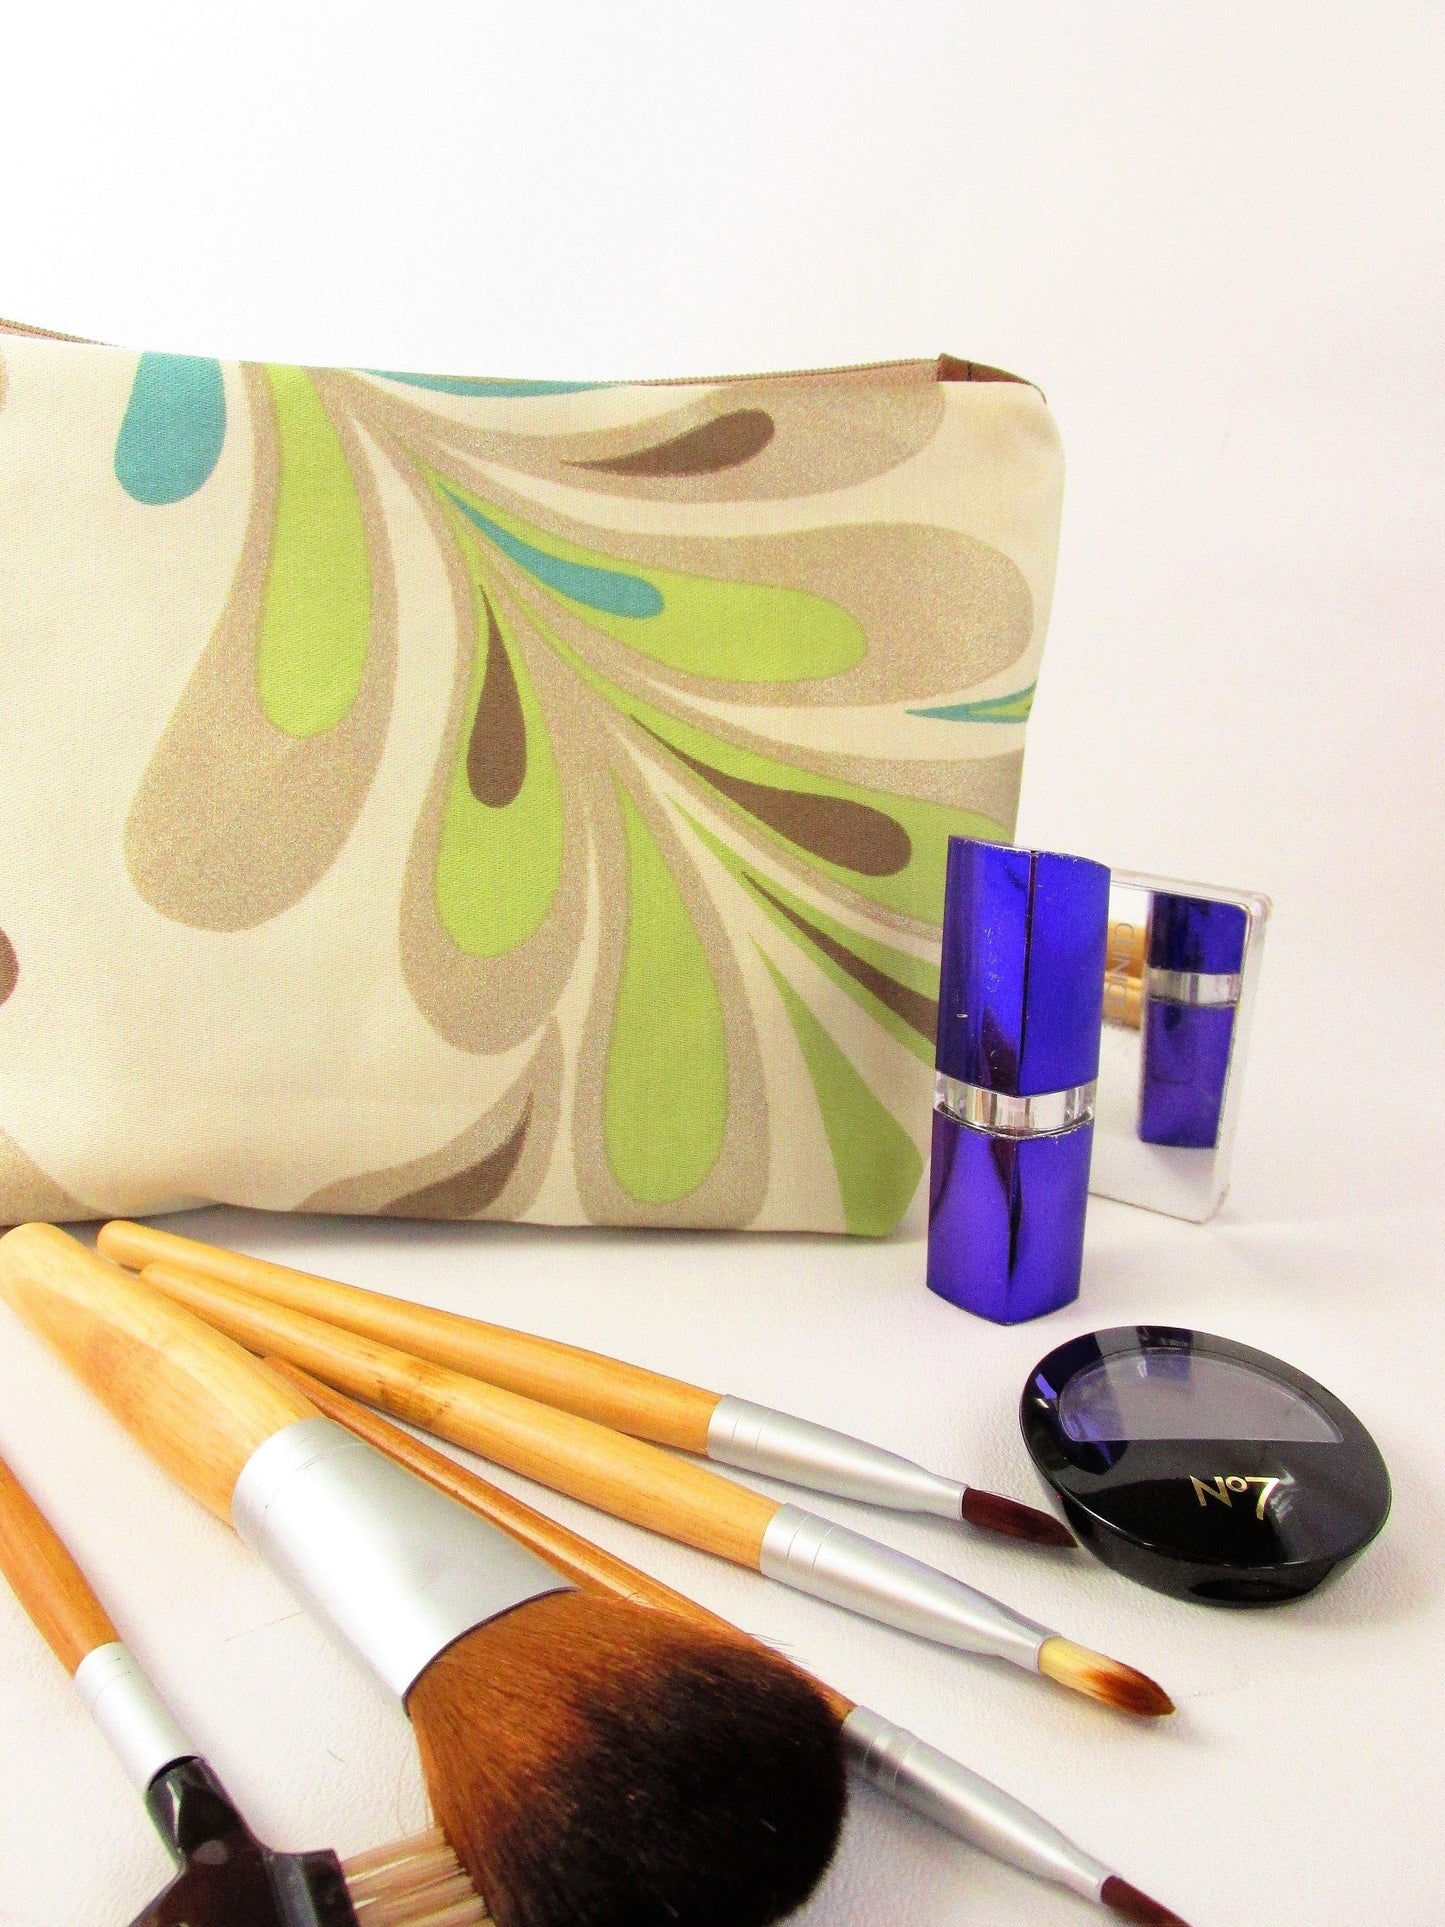 Gift set containing Make Up Wrap, Make Up Bag and Brushes - Olganna